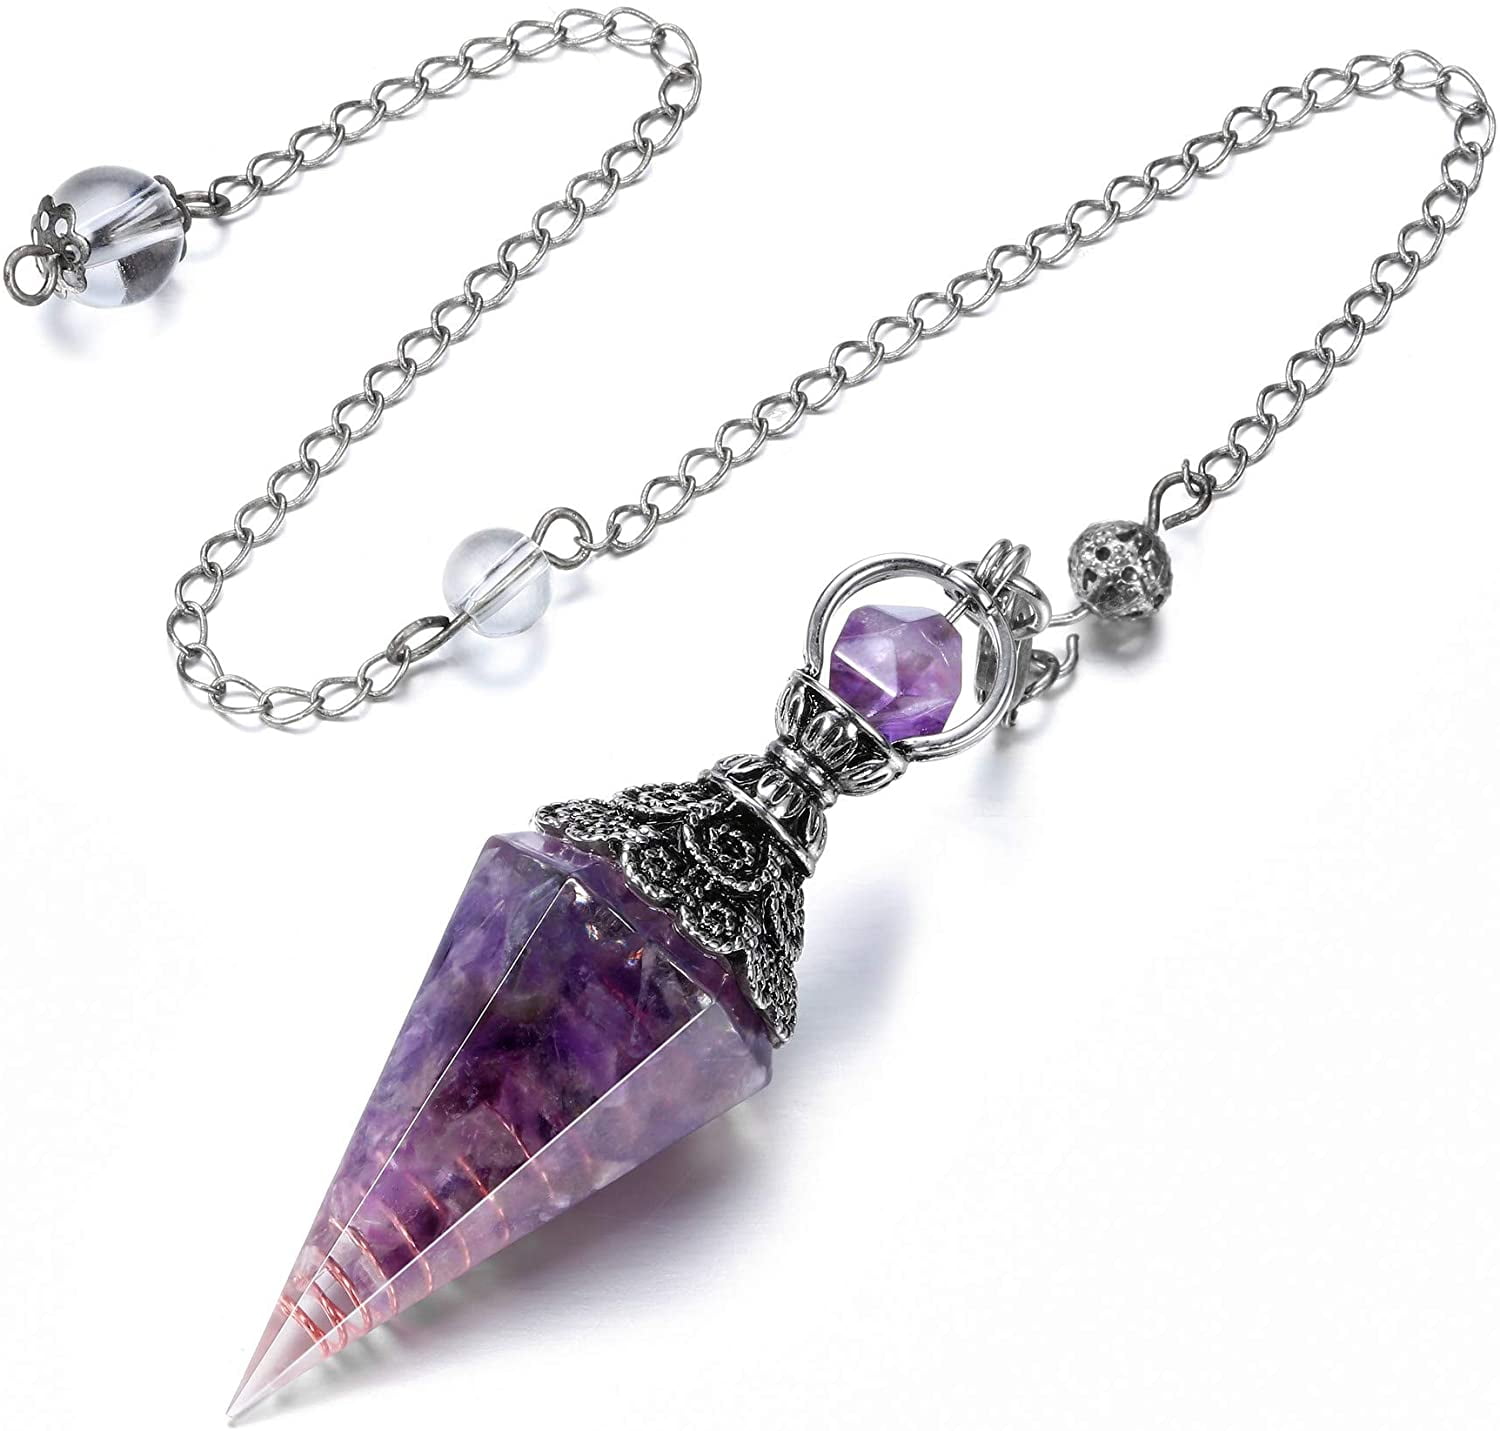 Natural Amethyst Gemstones Hexagonal Pointed Reiki Chakra Beads Pendant Necklace 